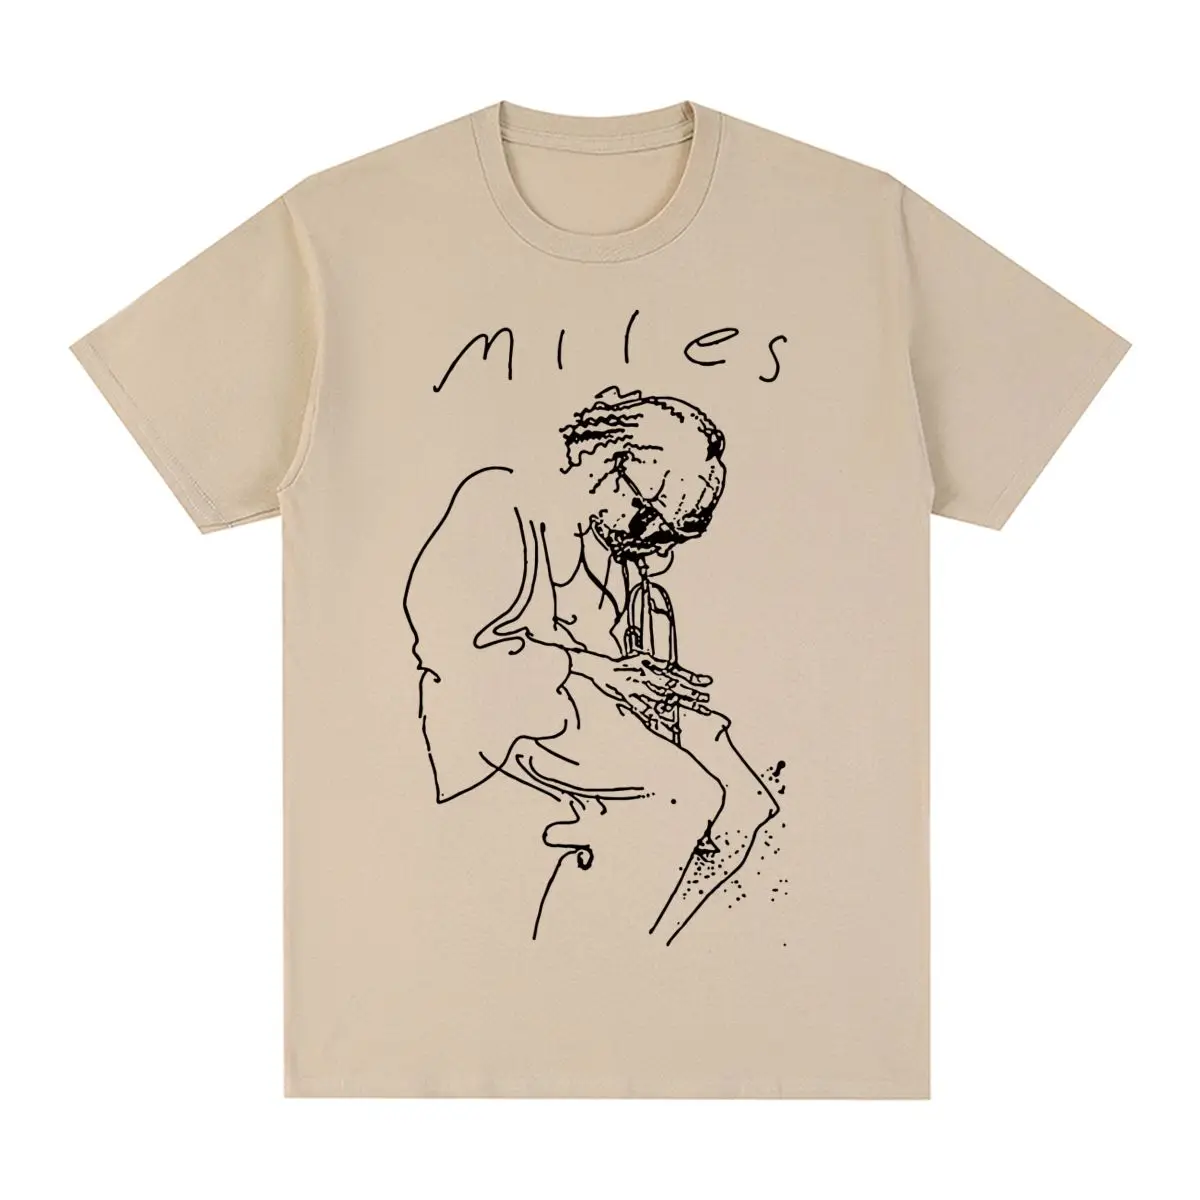 

Miles Davis Vintage T-shirt Retro Music Jazz Concert Singer Art Cotton Men T shirt New Tee Tshirt Womens Tops